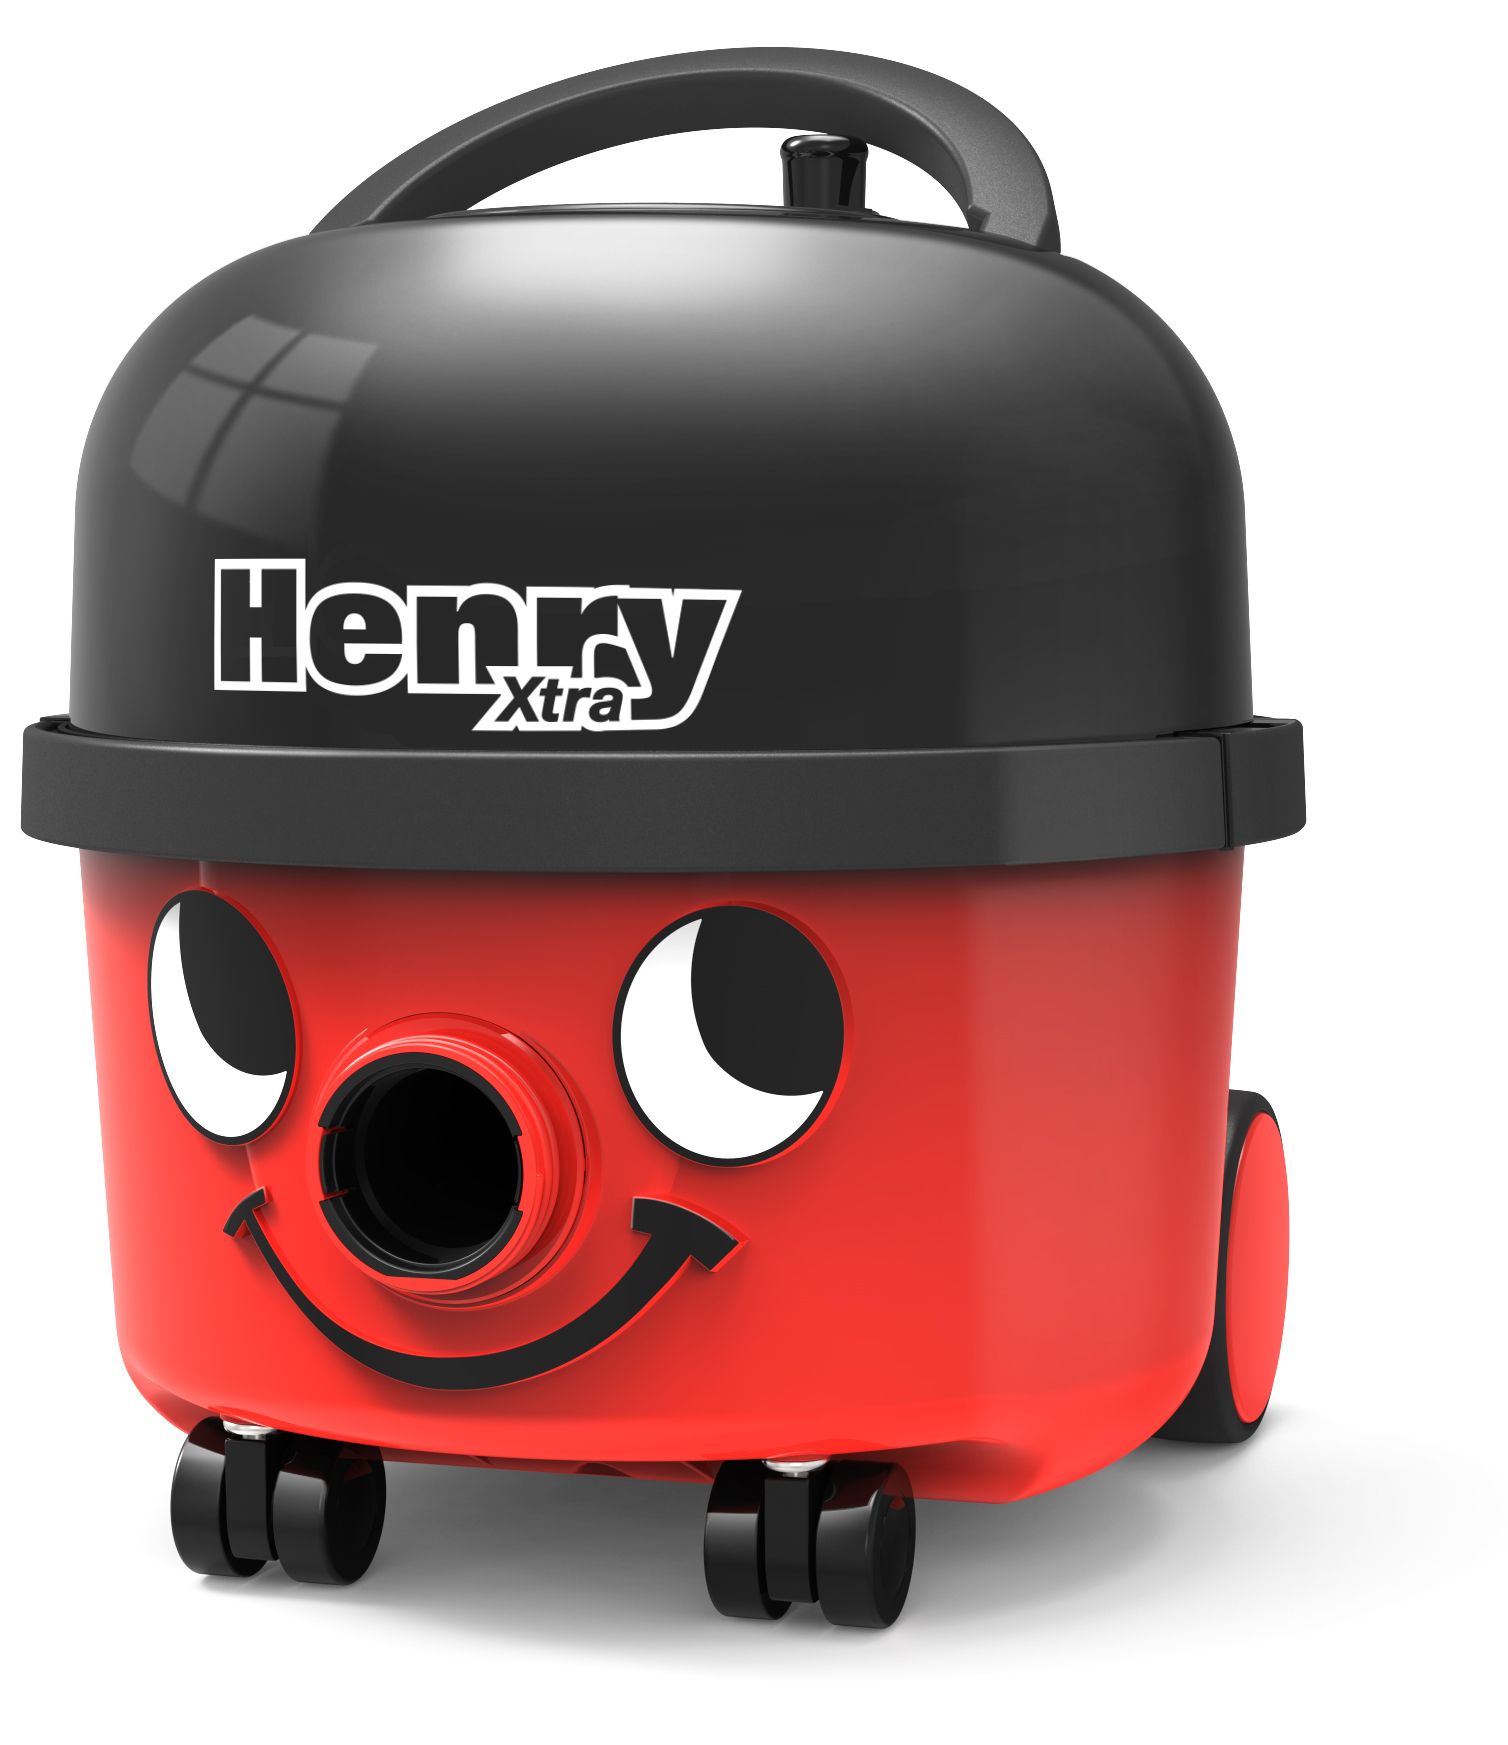 Stofzuiger Henry Xtra HVX200-11 rood met kit XS0